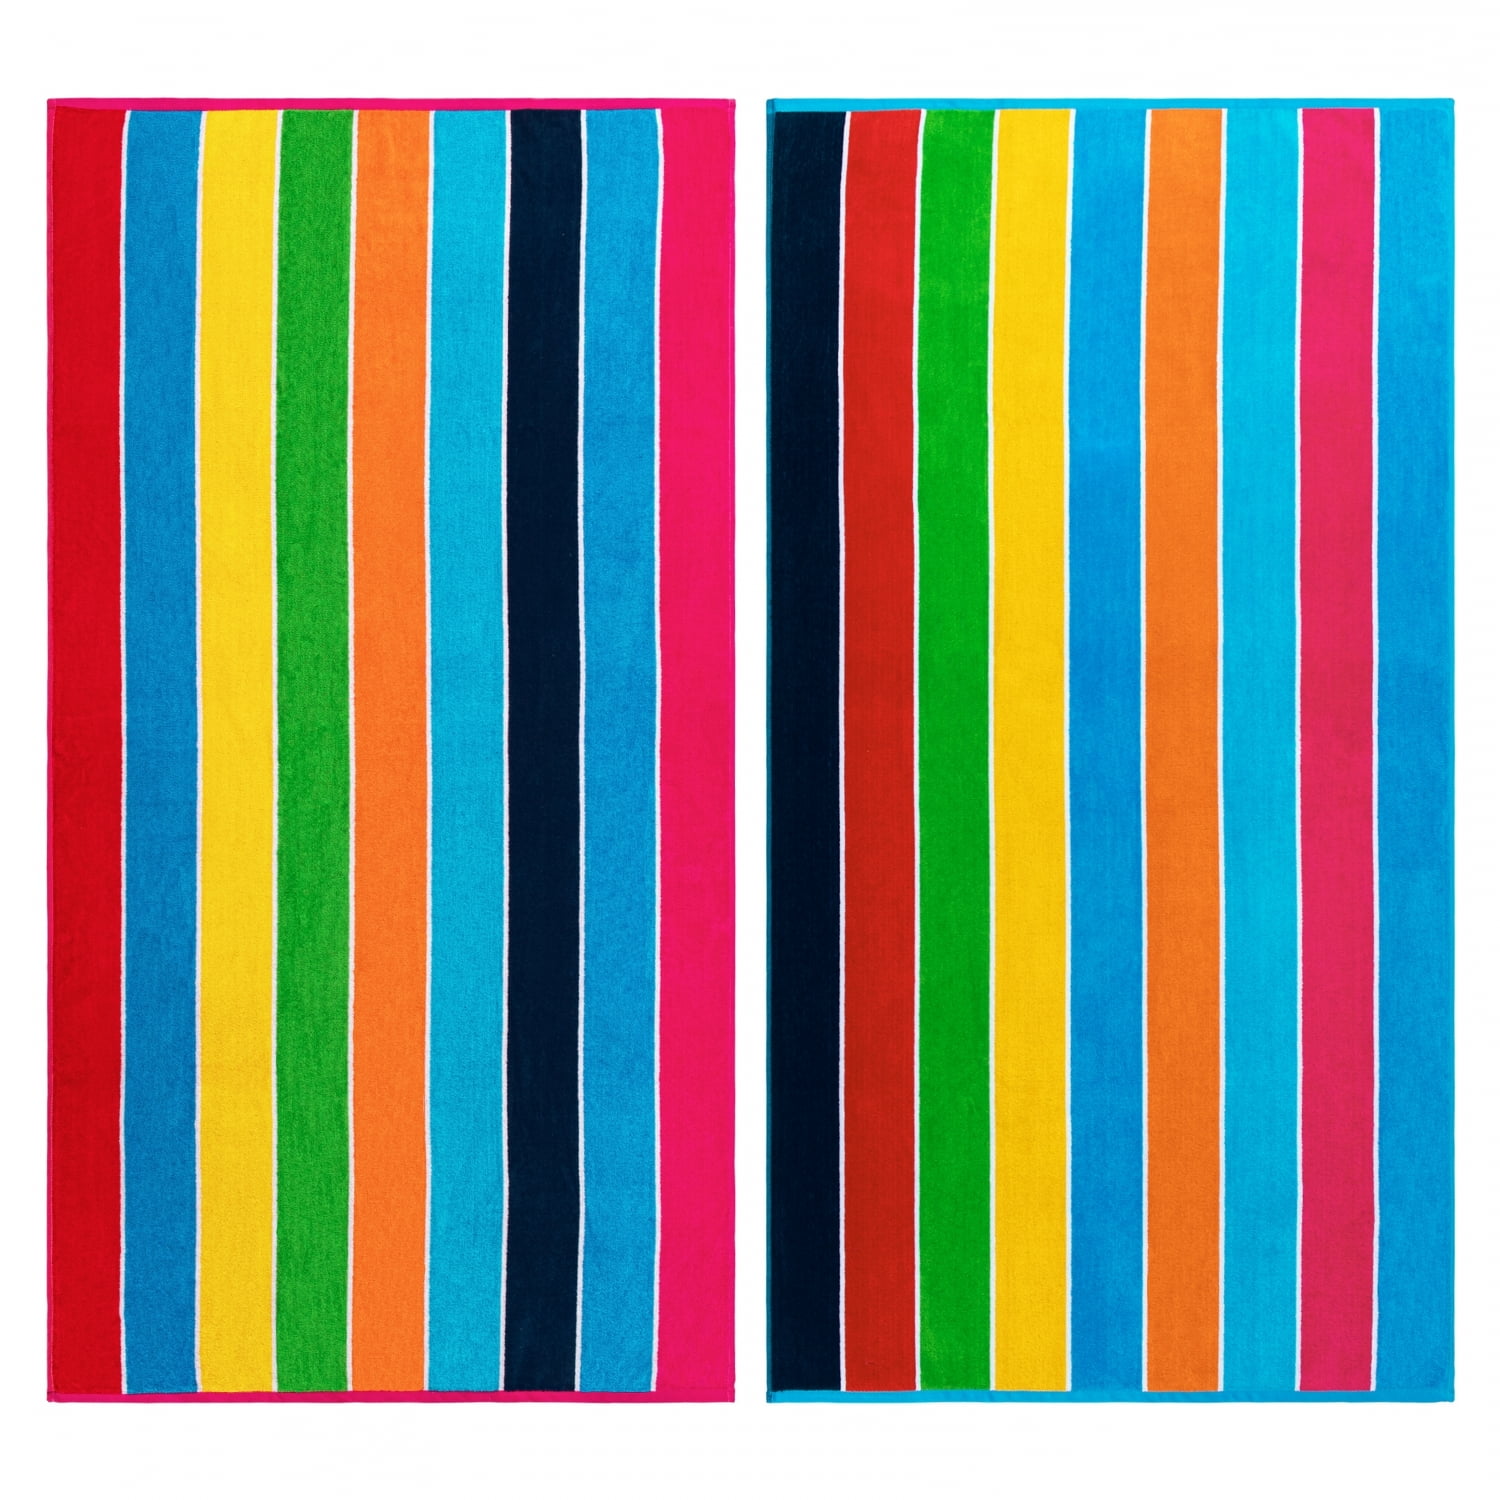 Superior 2-Piece Rainbow Striped Cotton Beach Towel Set, Multicolor